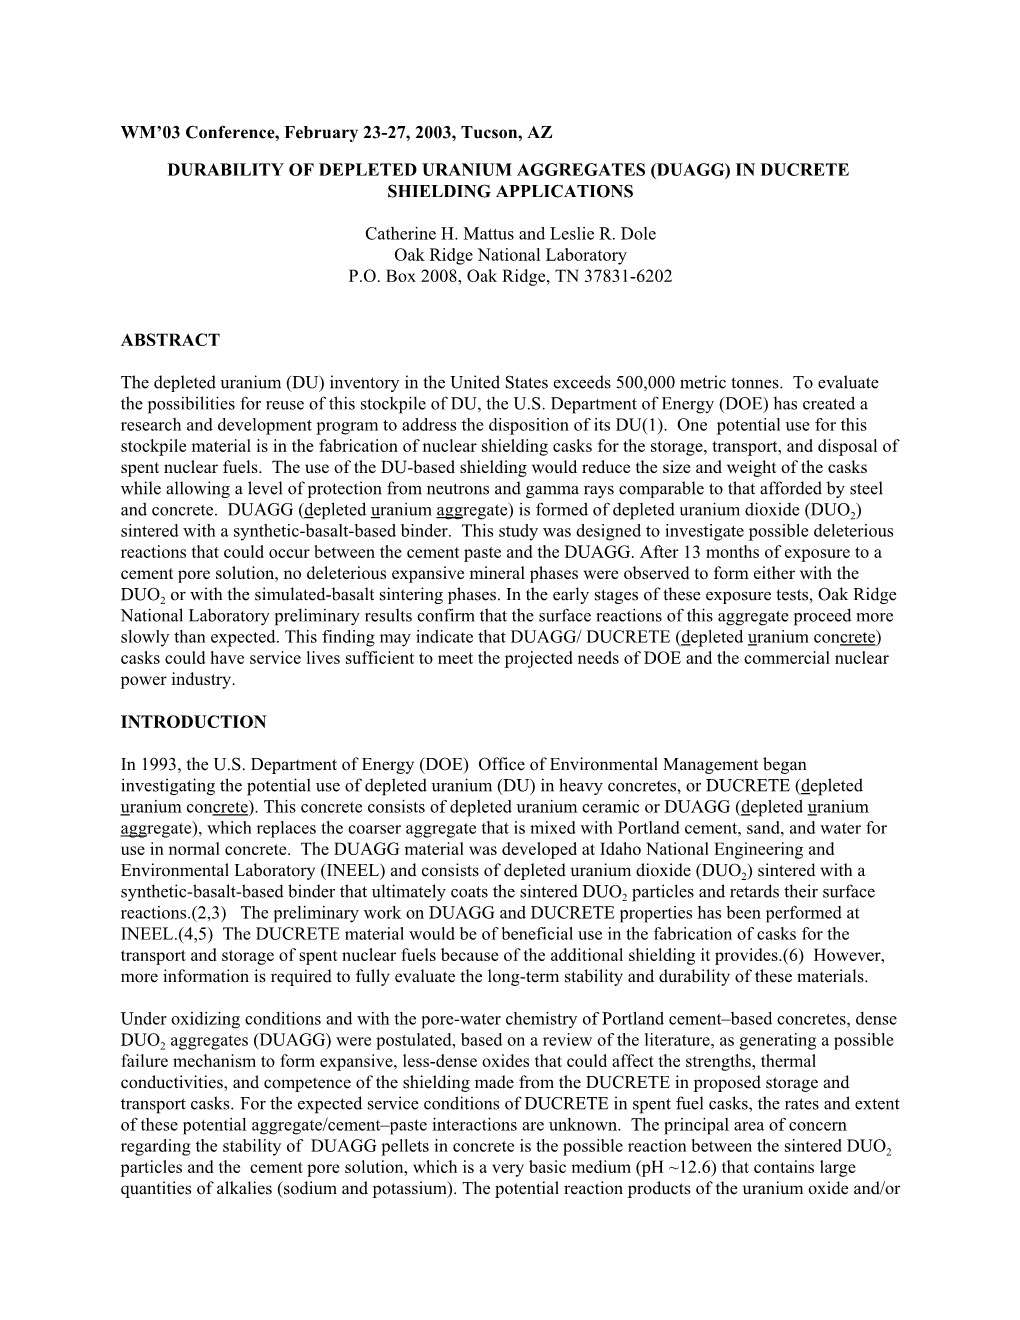 Durability of Depleted Uranium Aggregates (Duagg) in Ducrete Shielding Applications